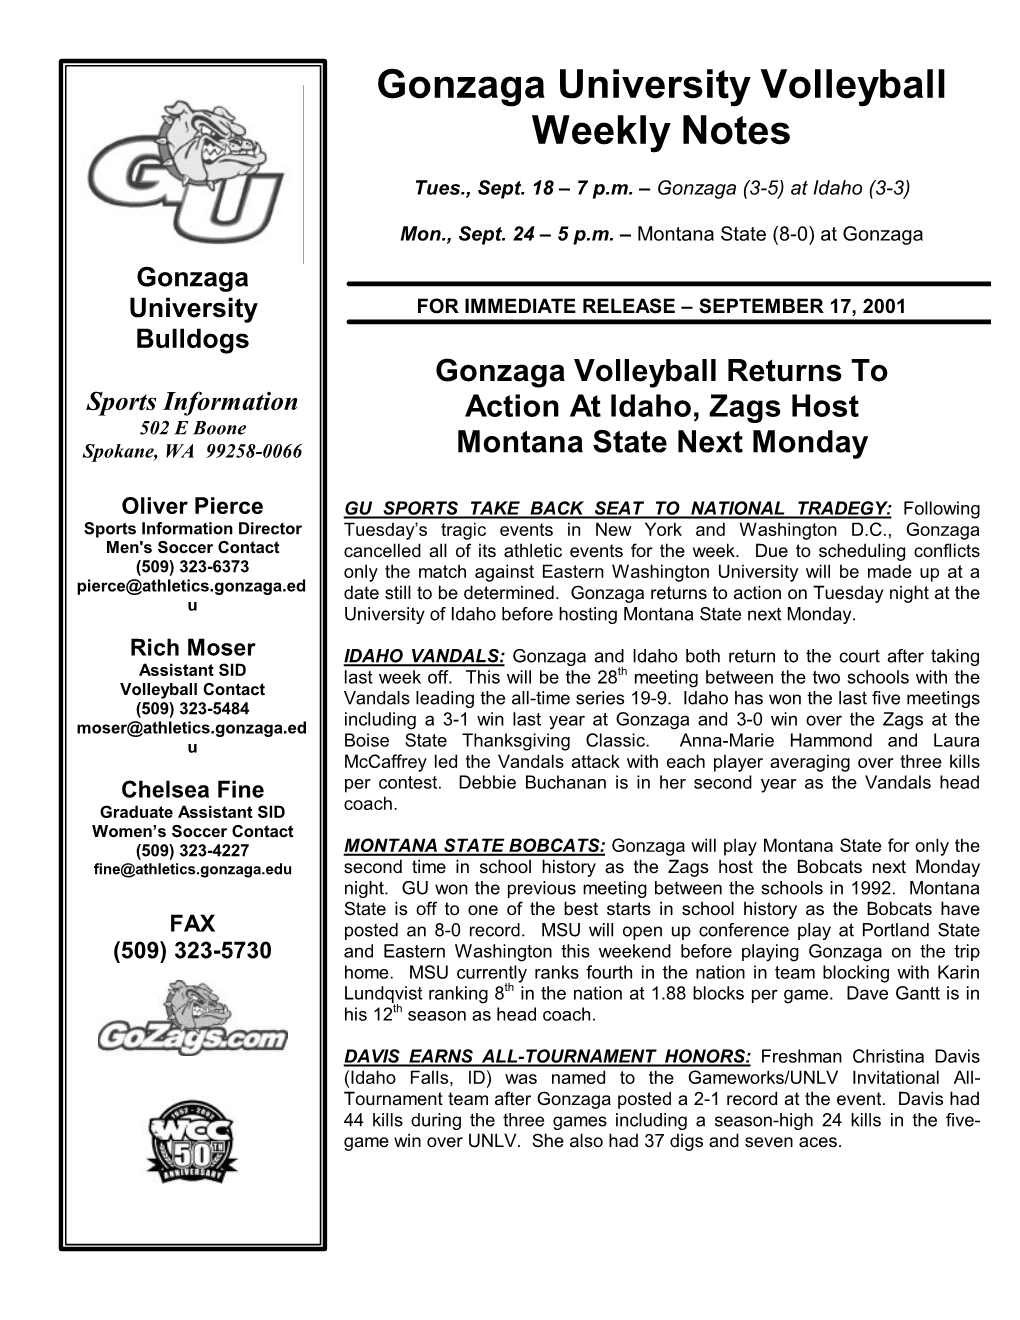 Gonzaga University Volleyball Weekly Notes